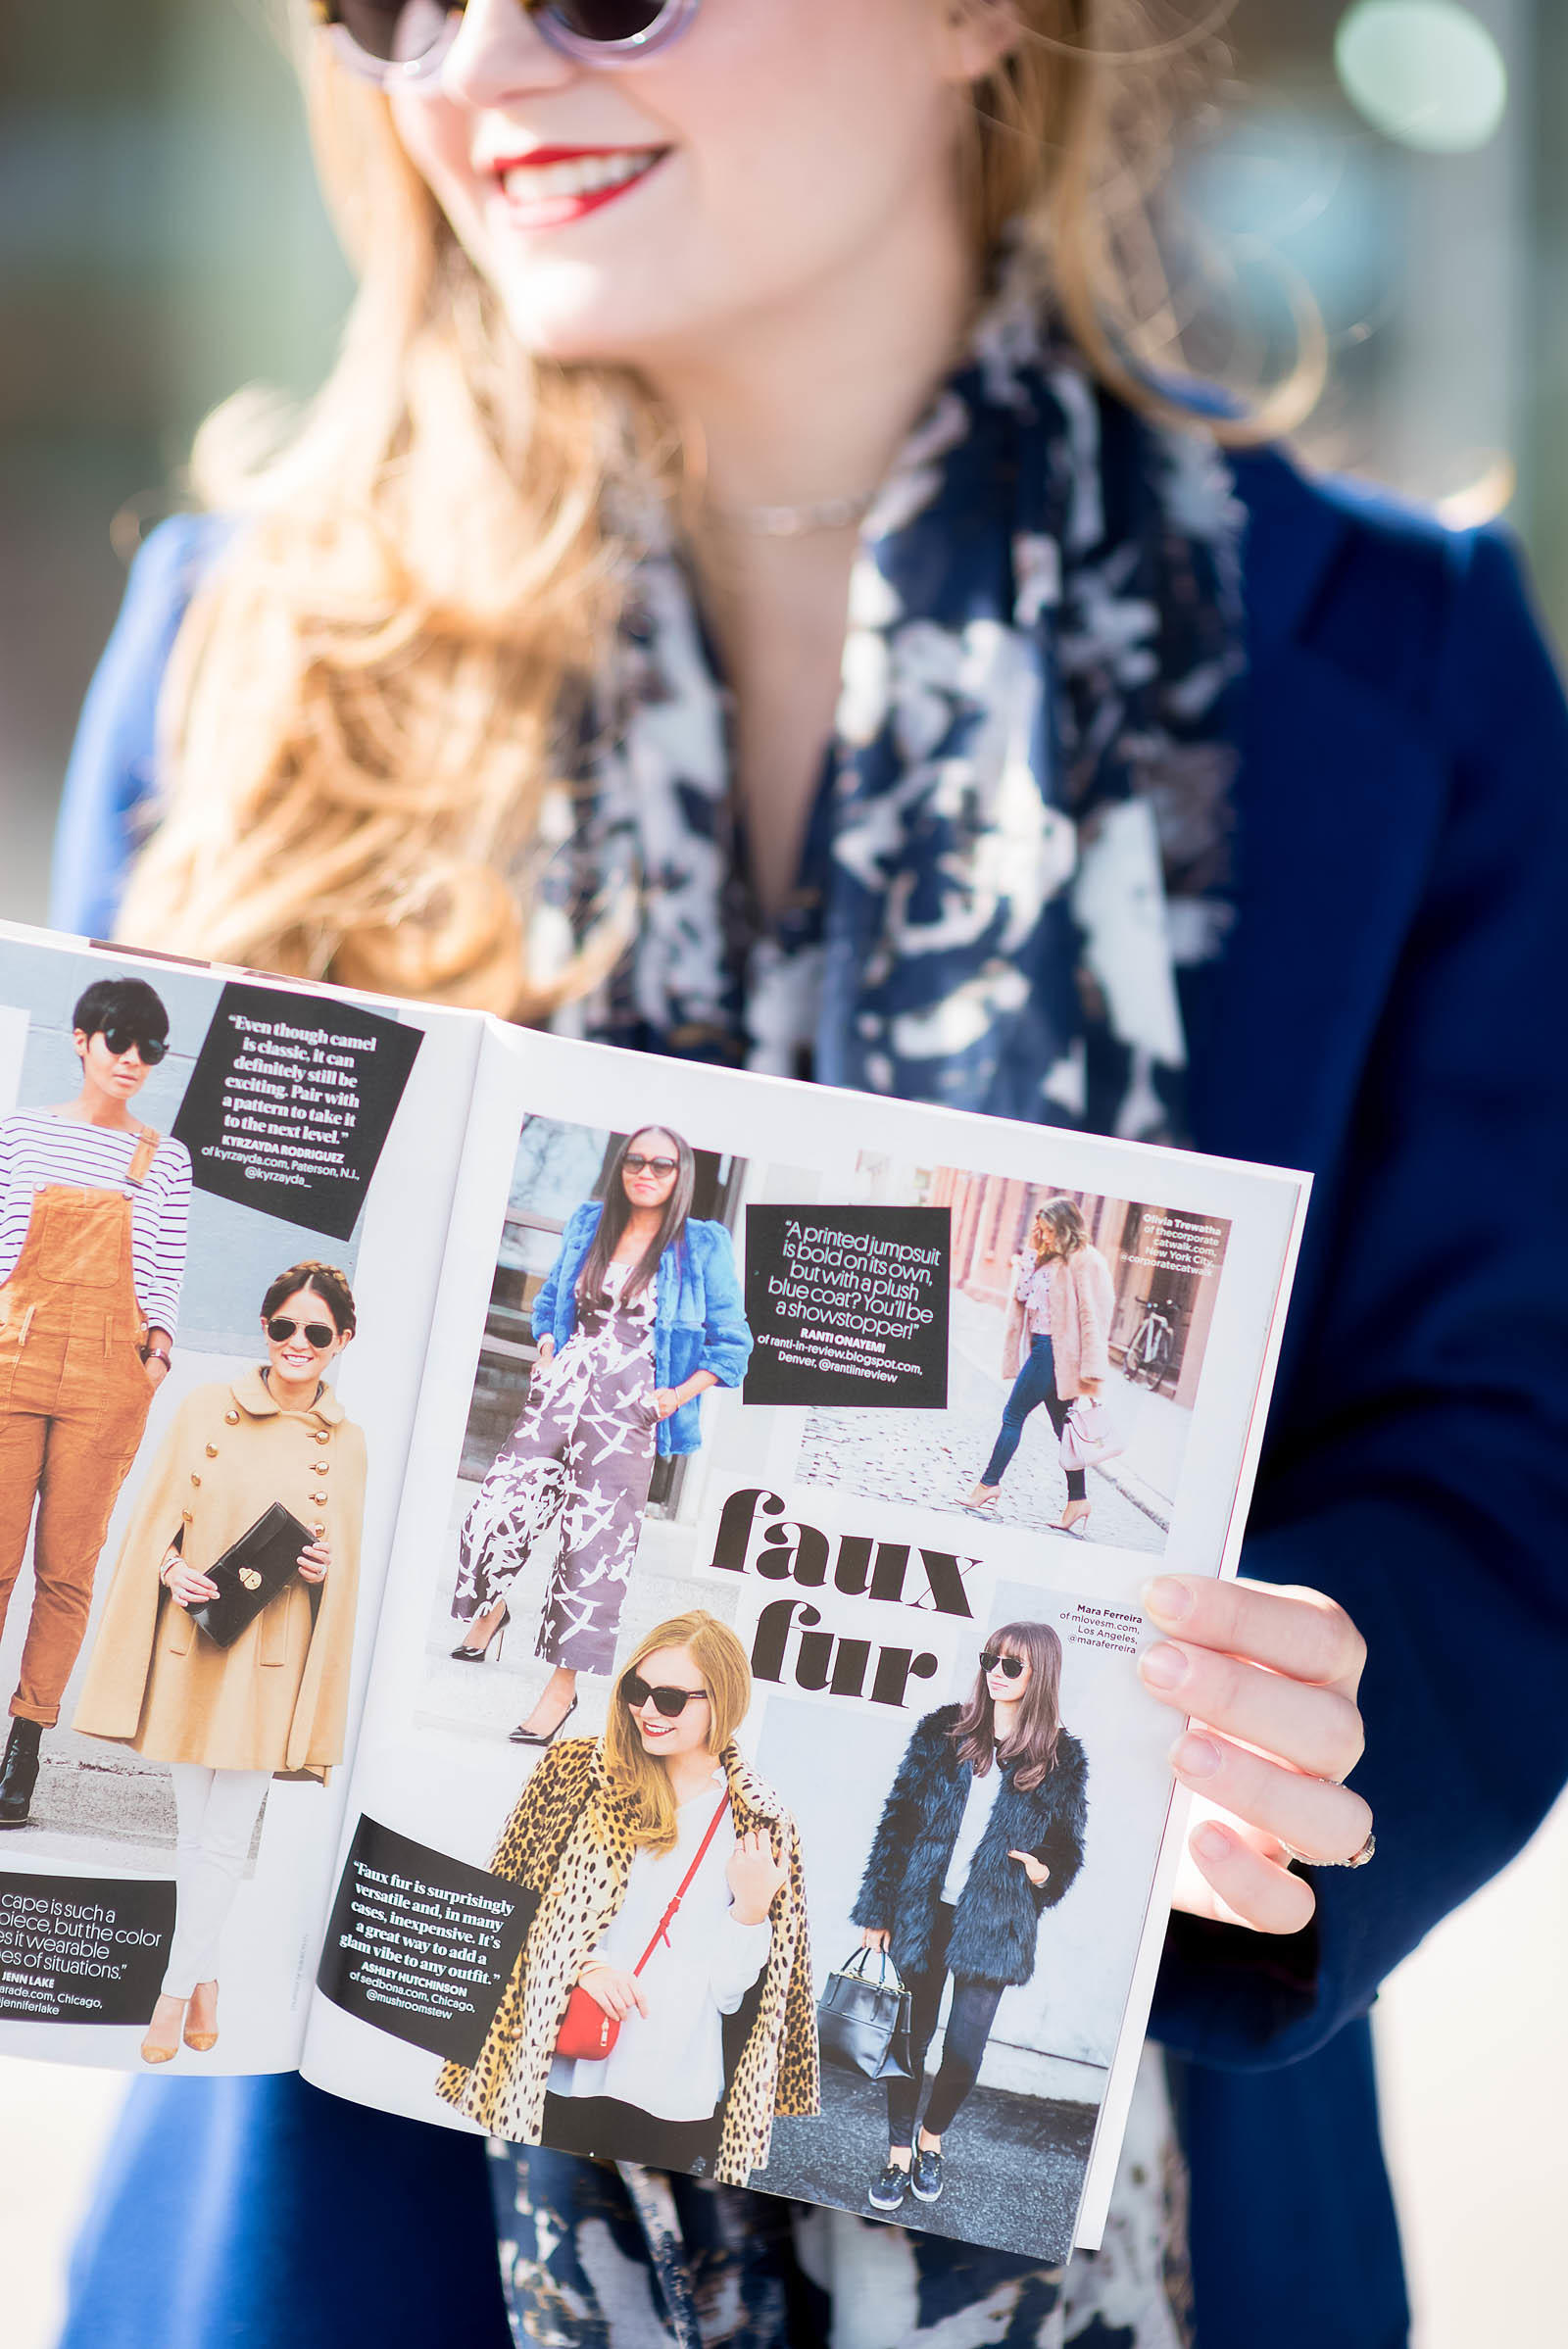 Style Watch Magazine November 2016 Blogger